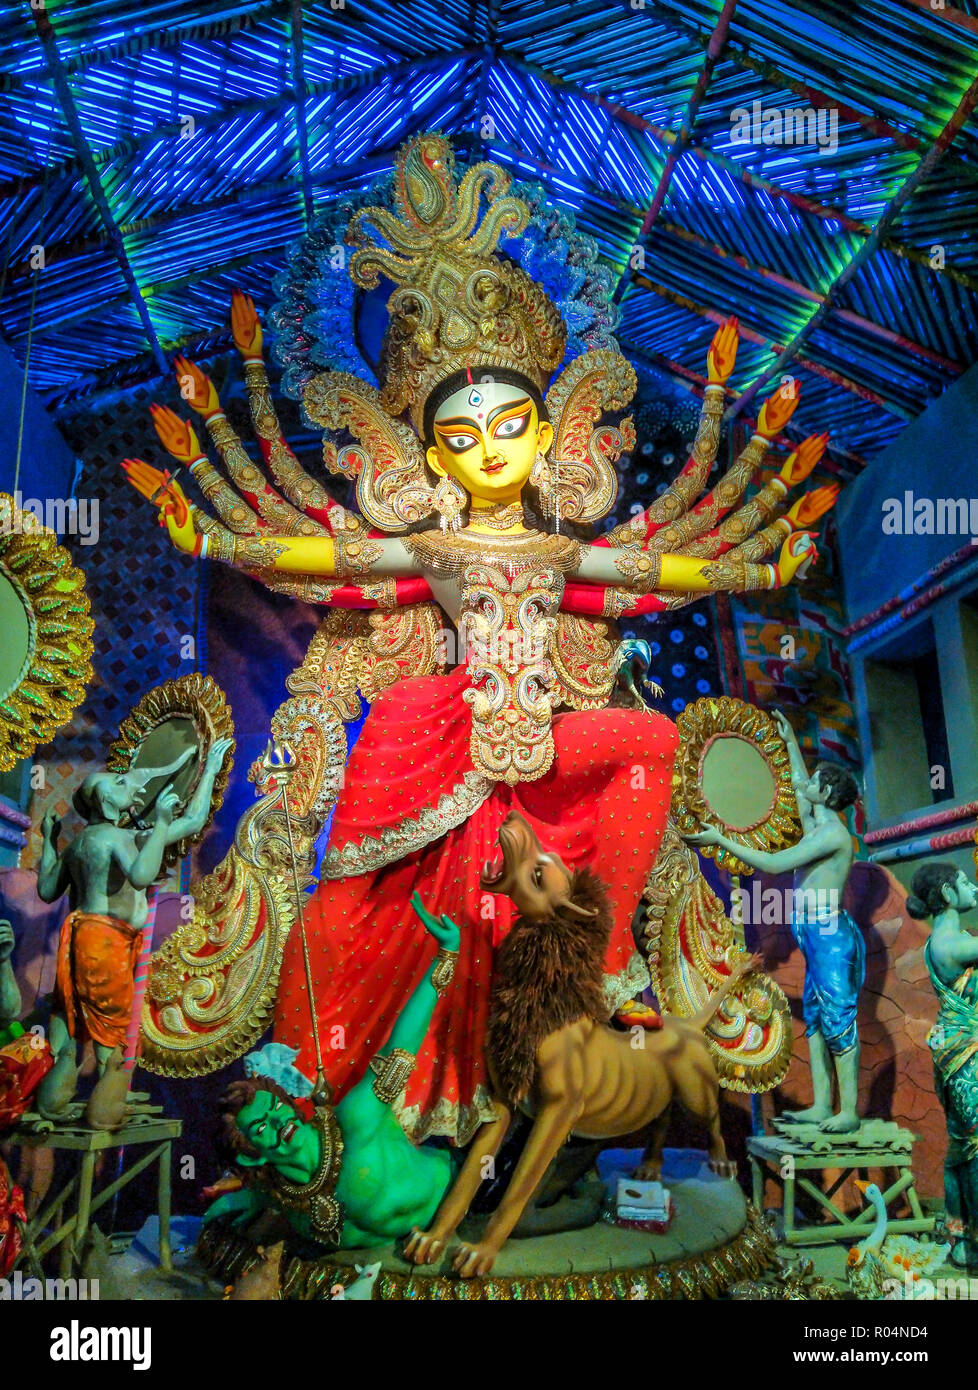 Sculpture of Hindu Goddess Durga during Durga Puja festival in October at Kolkata, Calcutta Stock Photo